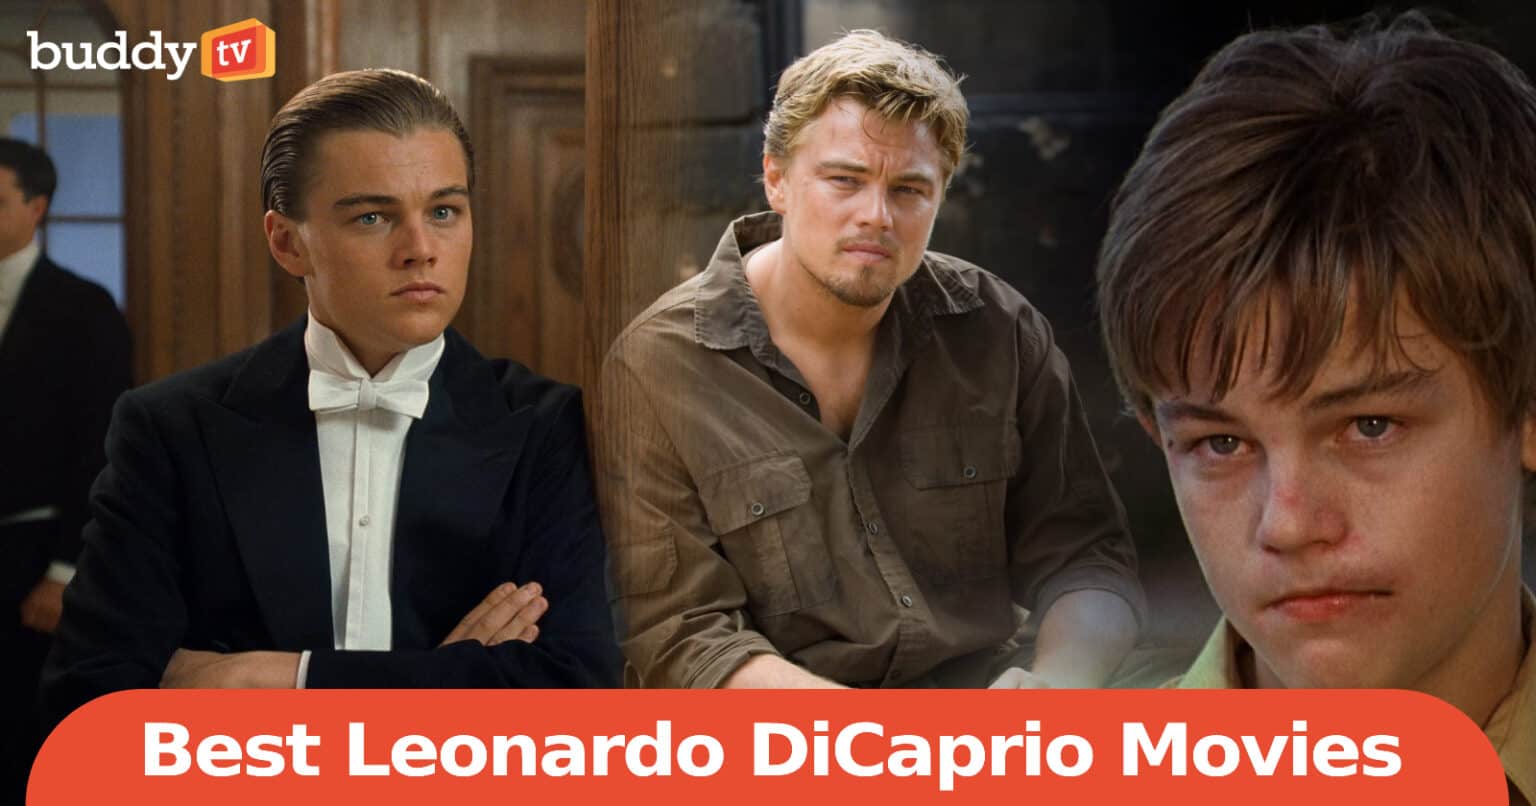 10 Best Leonardo Dicaprio Movies Ranked By Viewers Buddytv 